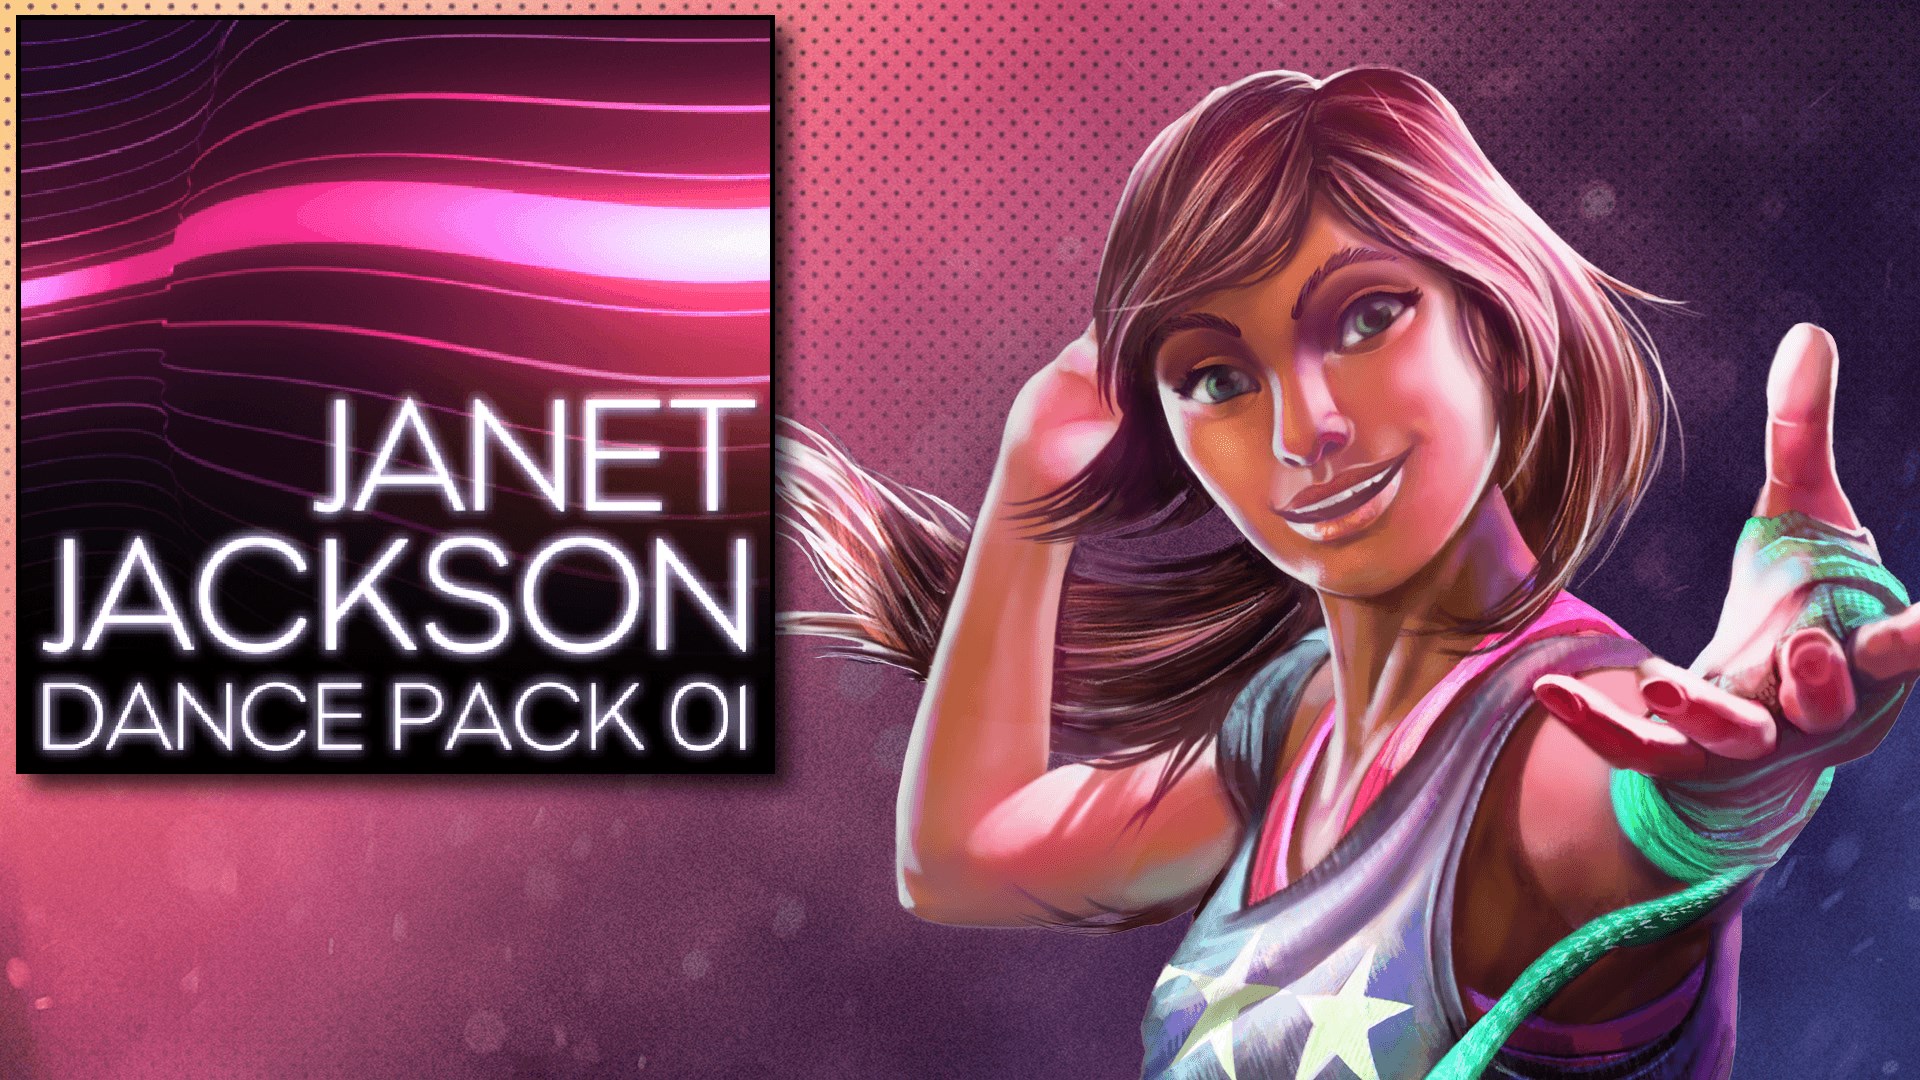 Janet Jackson Dance Pack 01